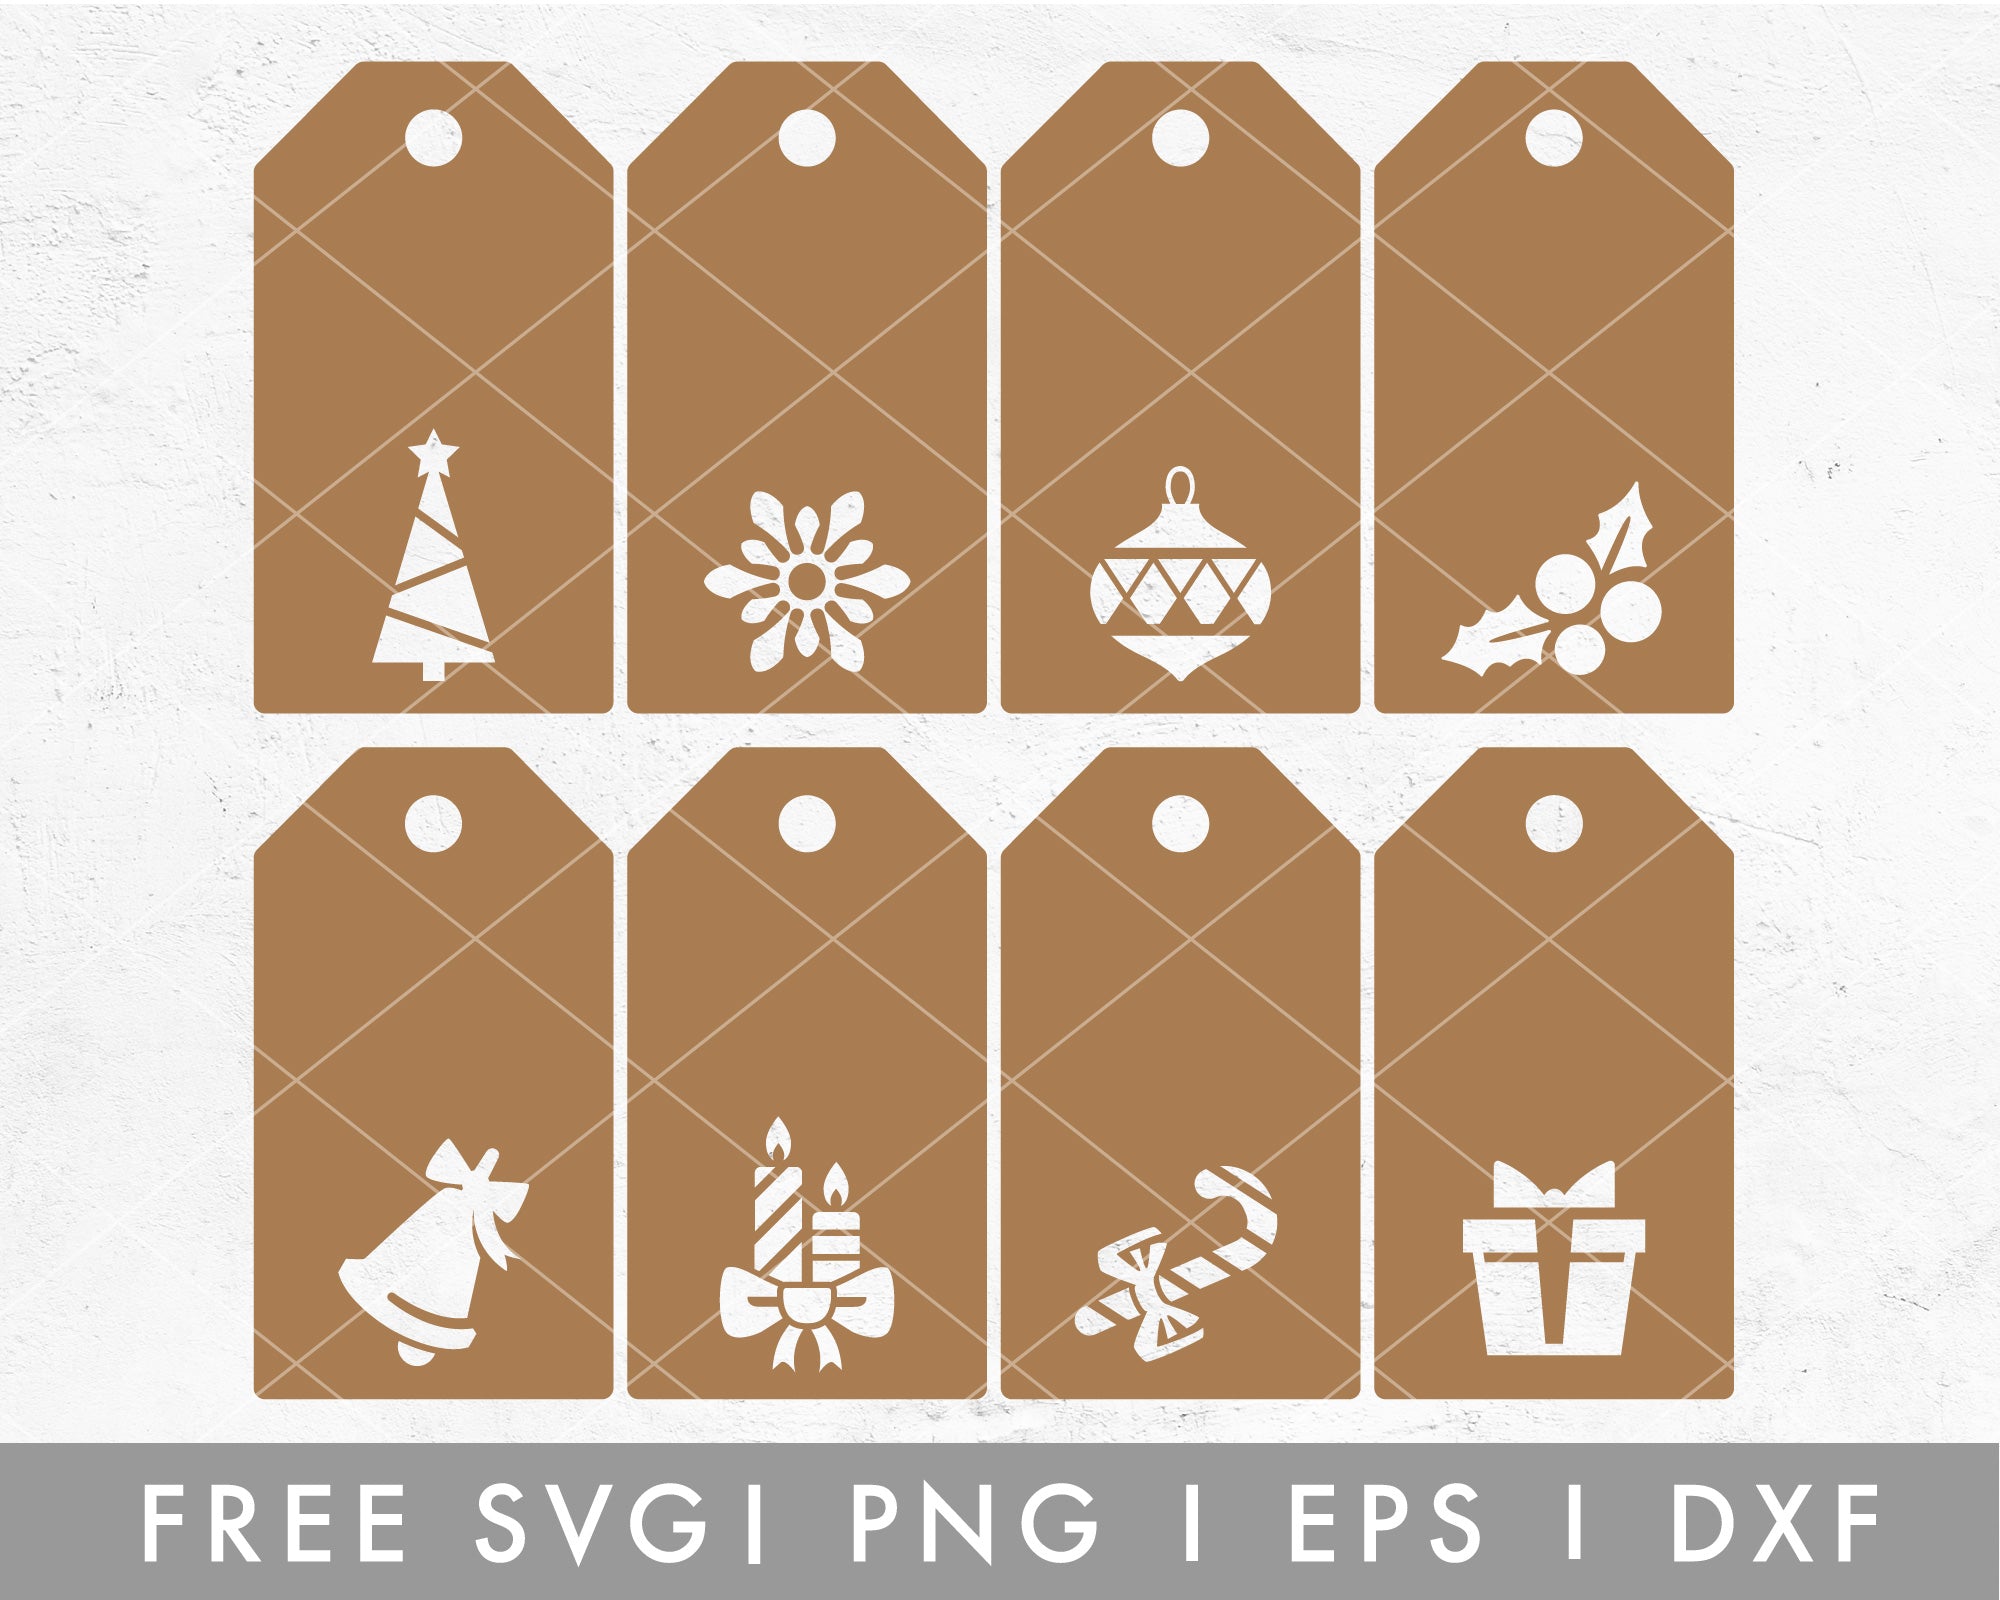 Christmas Gift Tags FREE SVG Cut Files